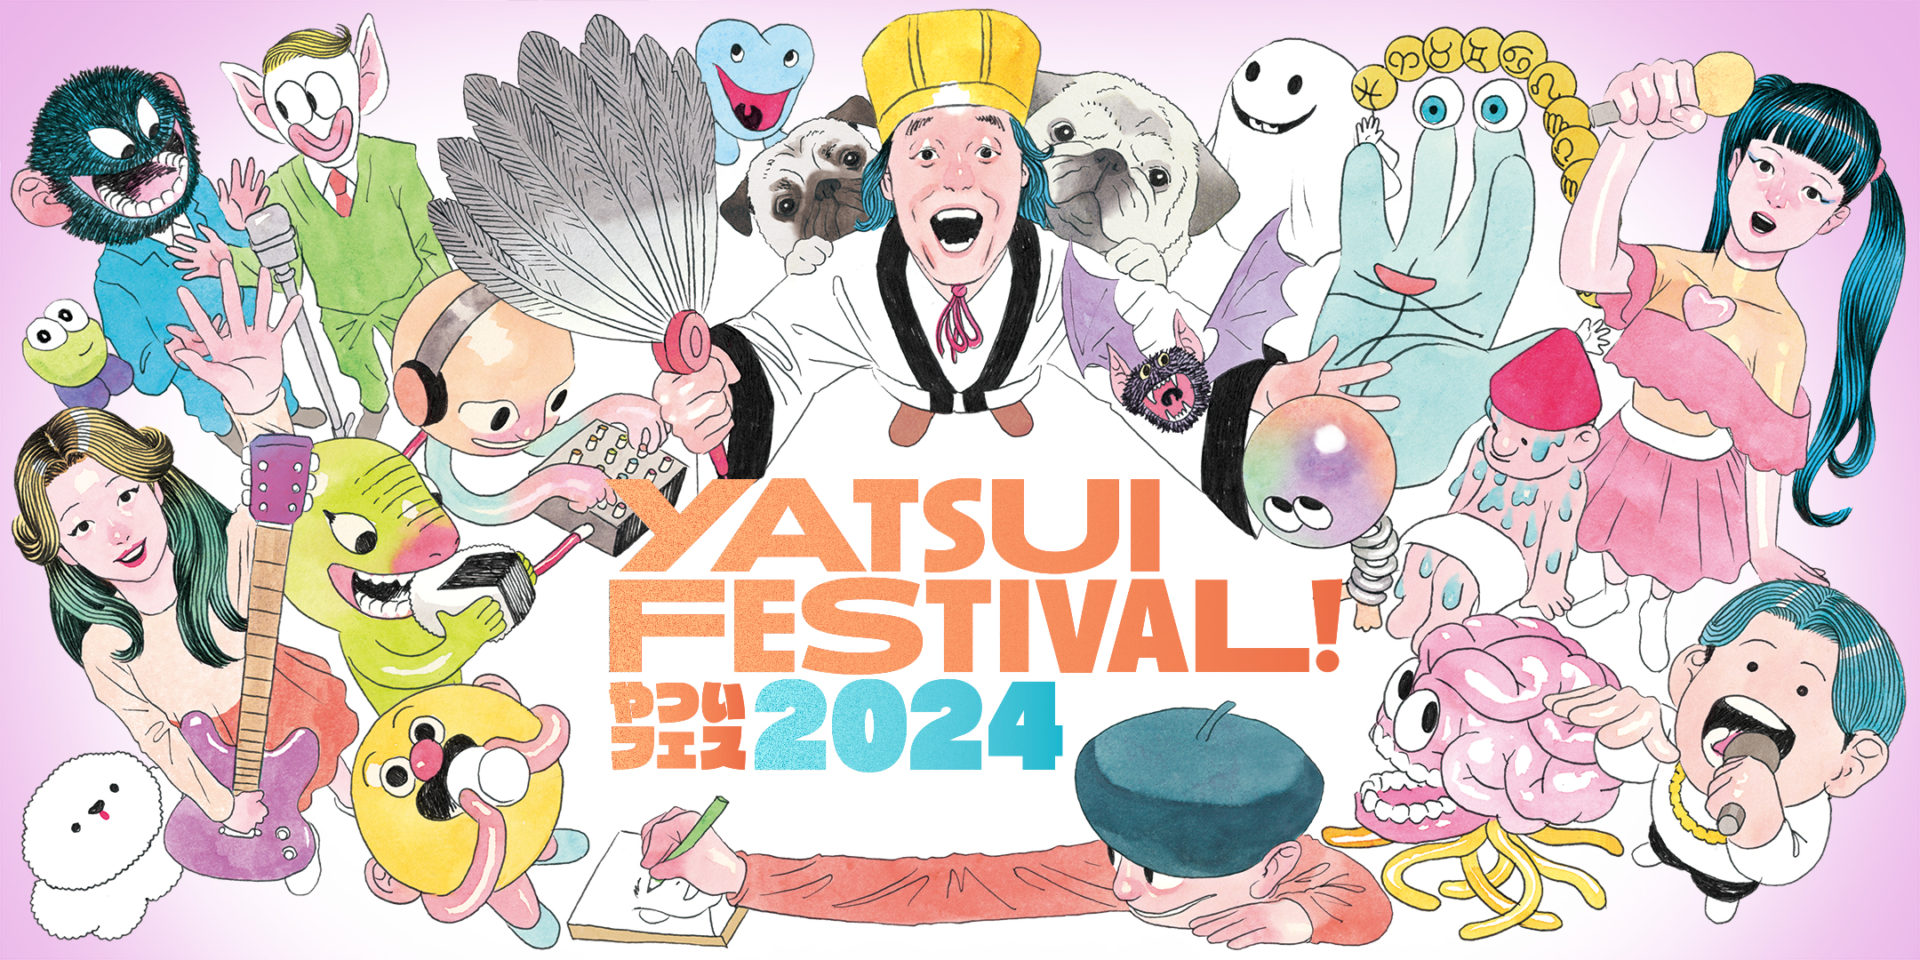 YATSUI FESTIVAL 2024